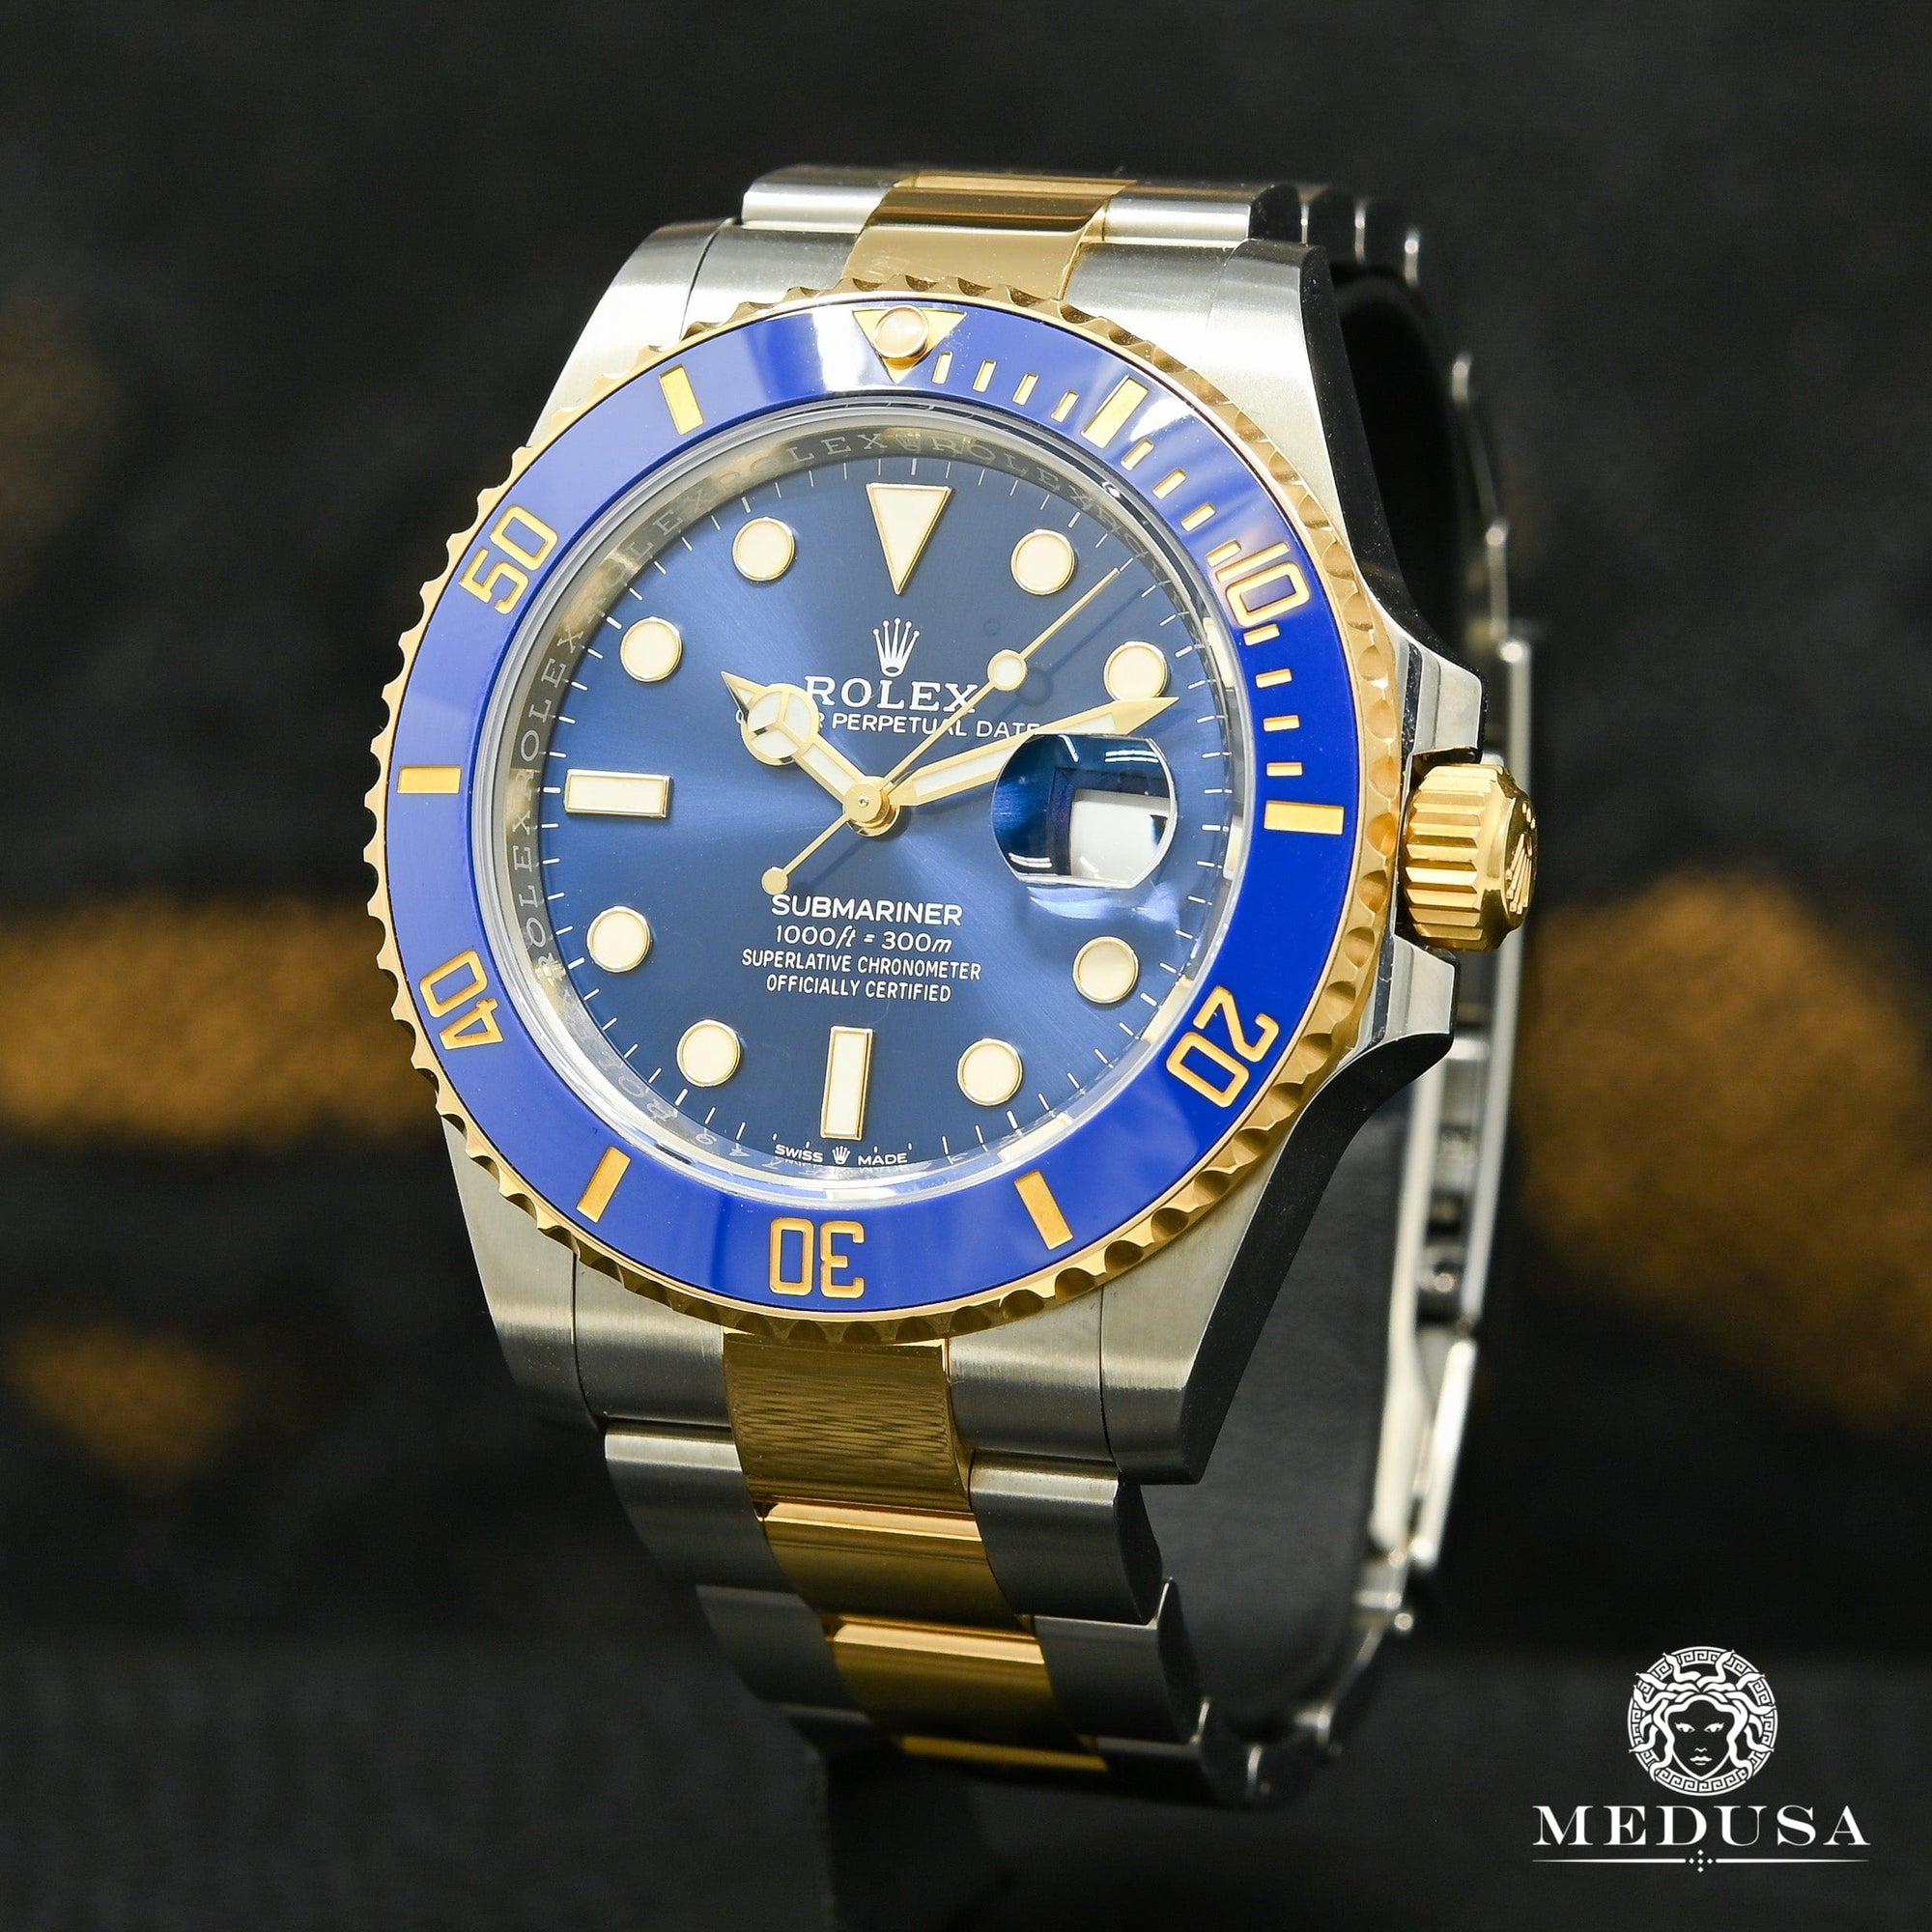 Rolex watch | Rolex Submariner Men's Watch 41mm - 126613LB Gold 2 Tones